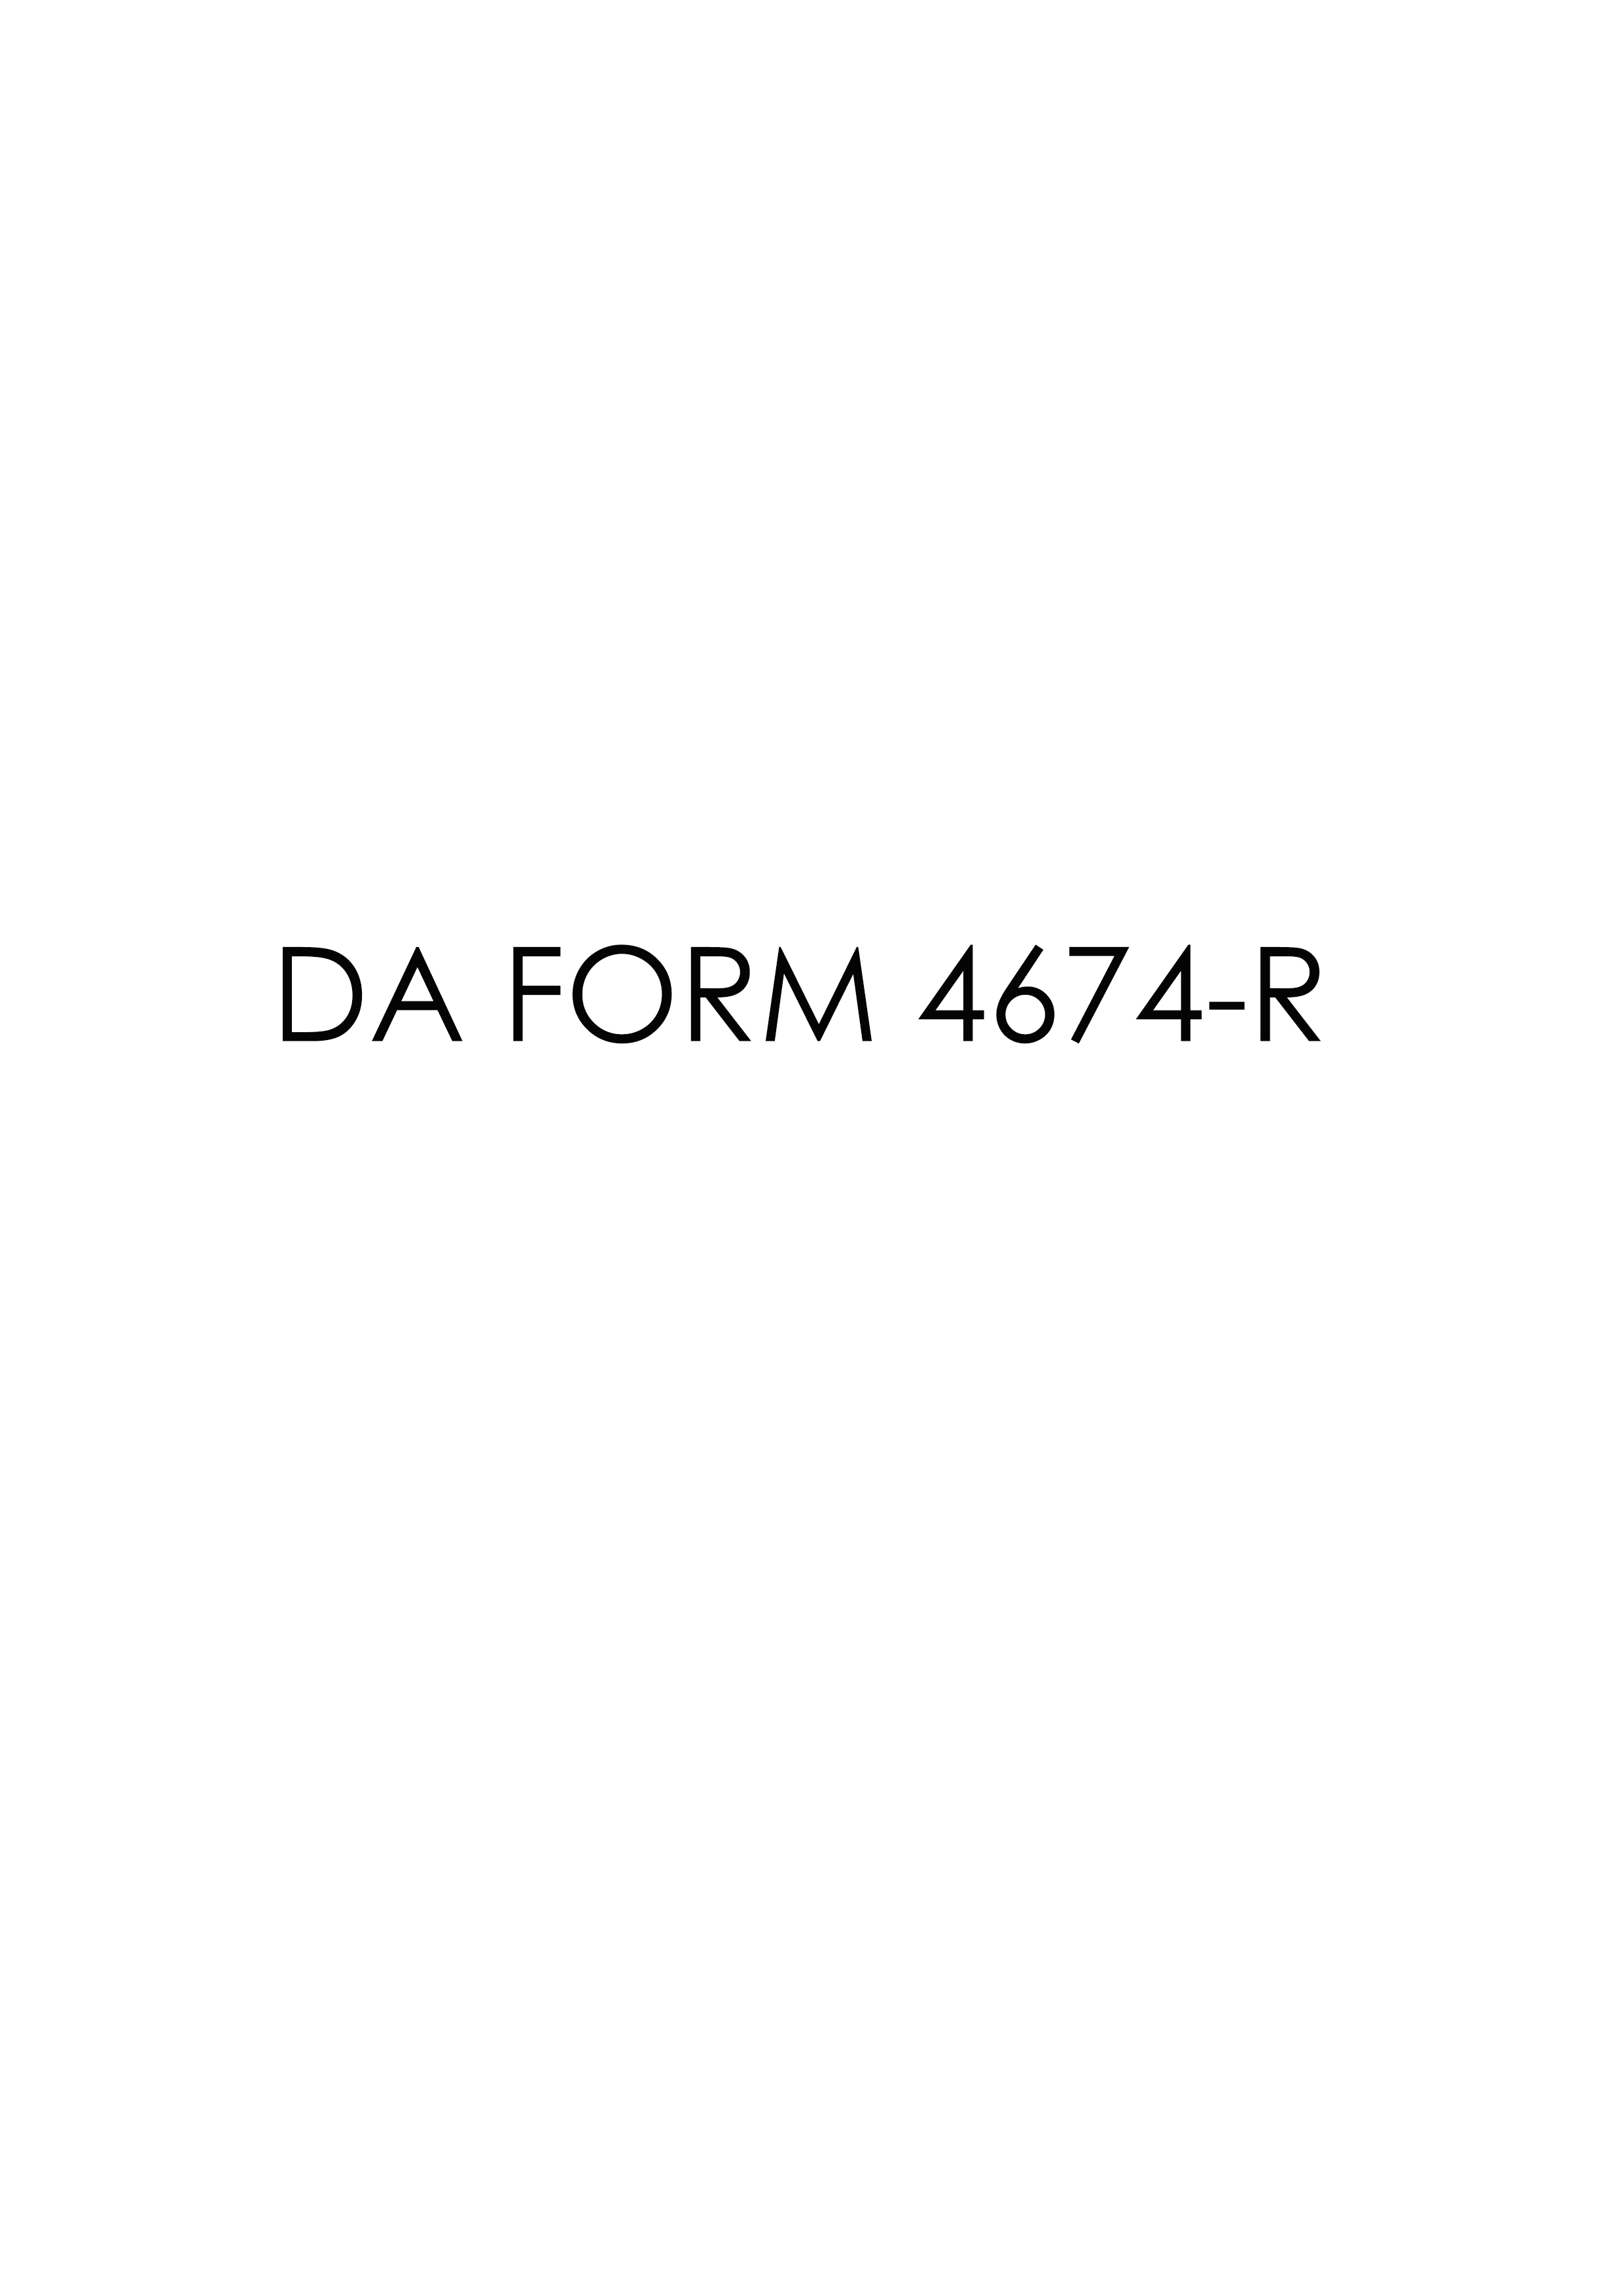 da Form 4674-R fillable